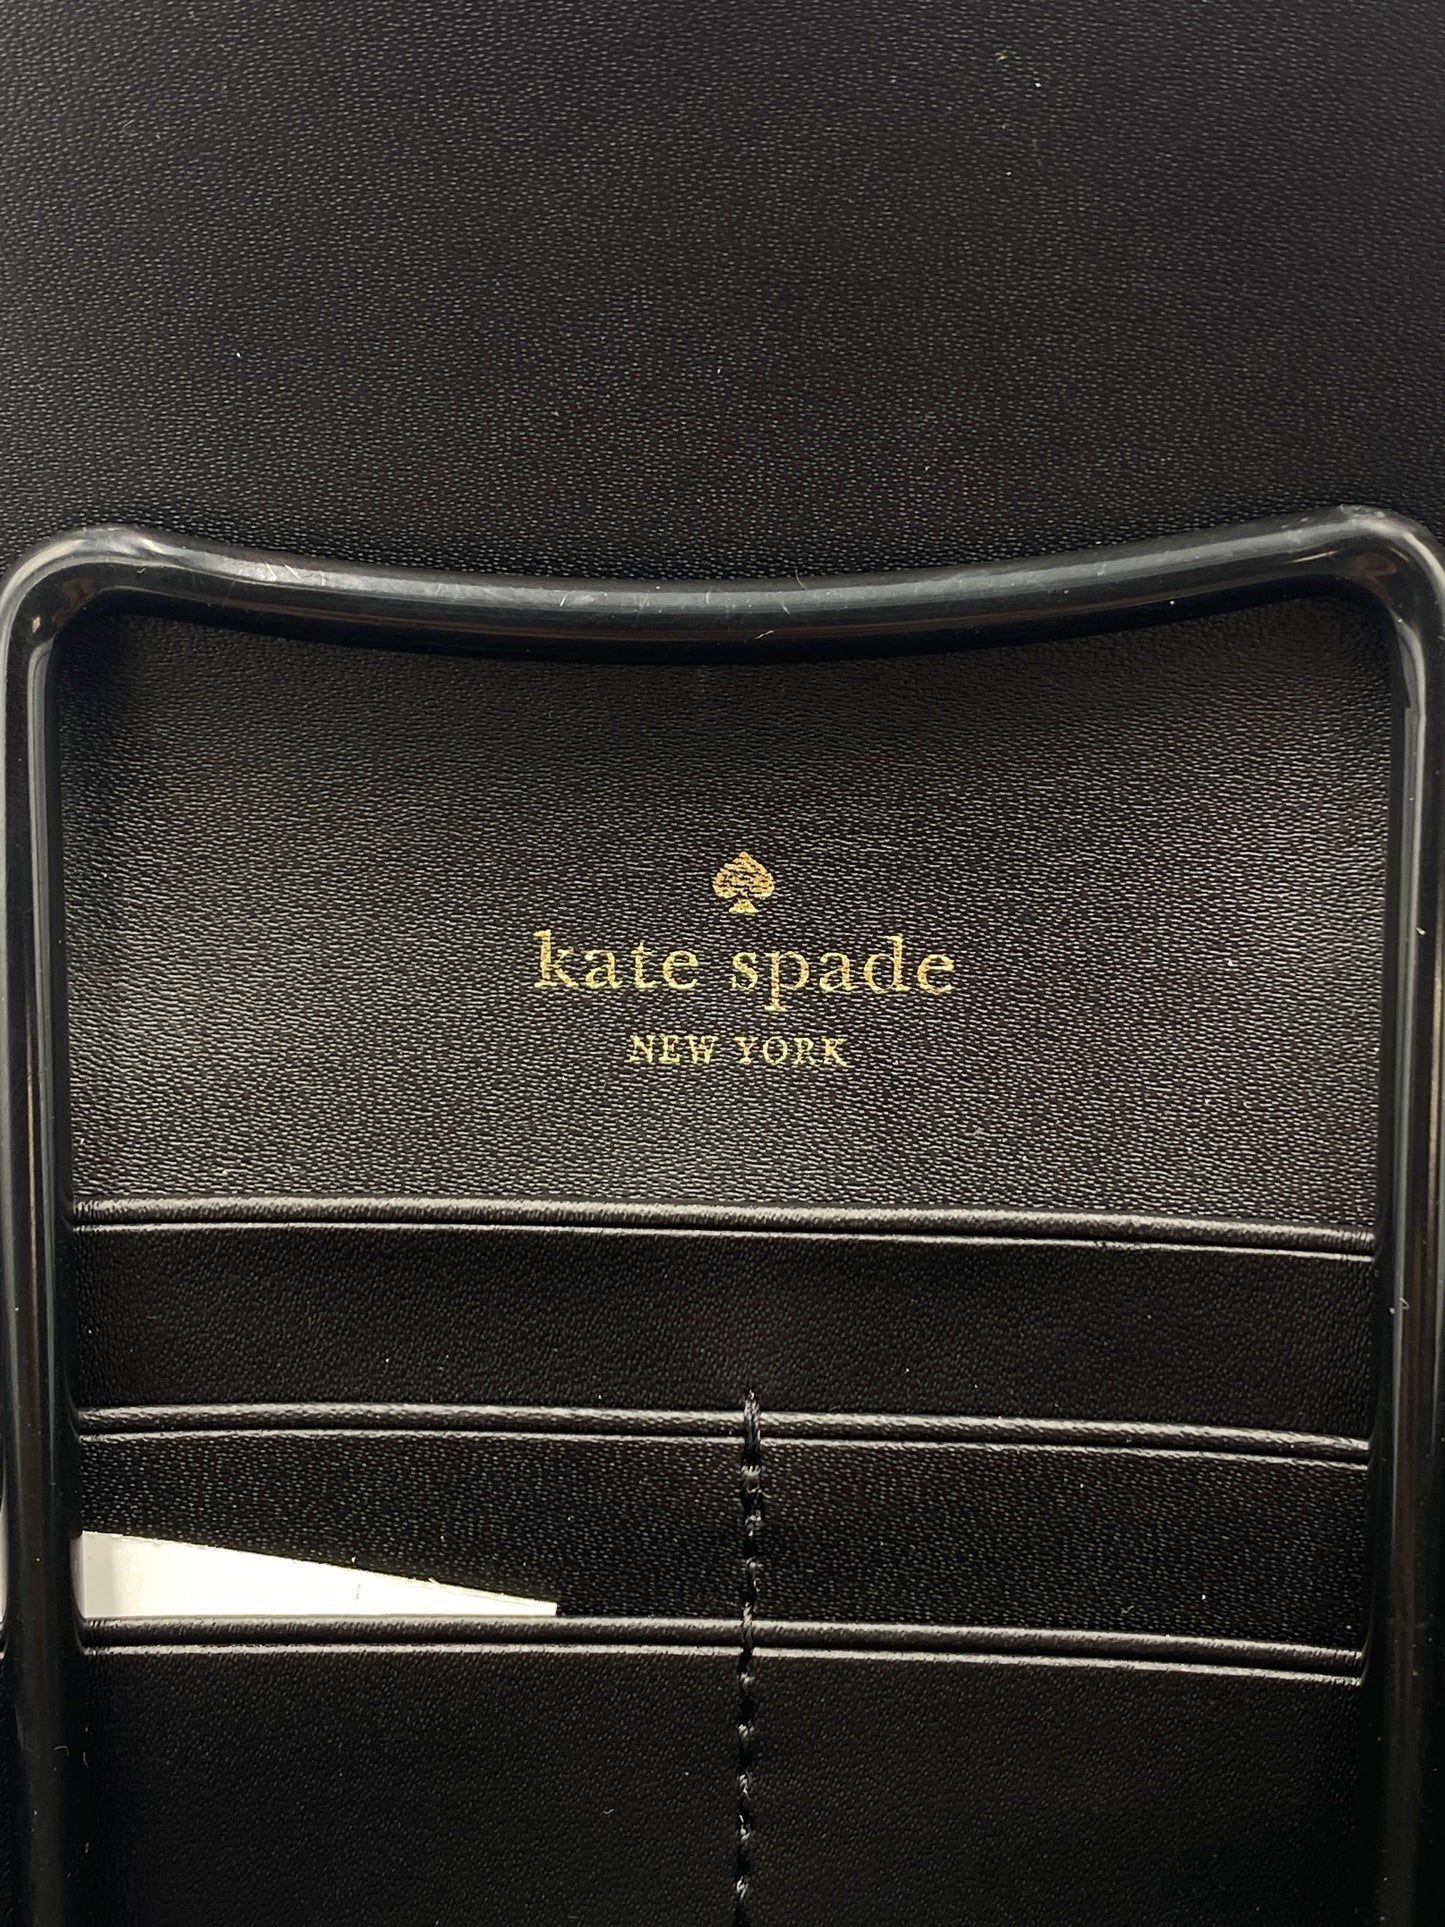 New! Handbag Designer By Kate Spade